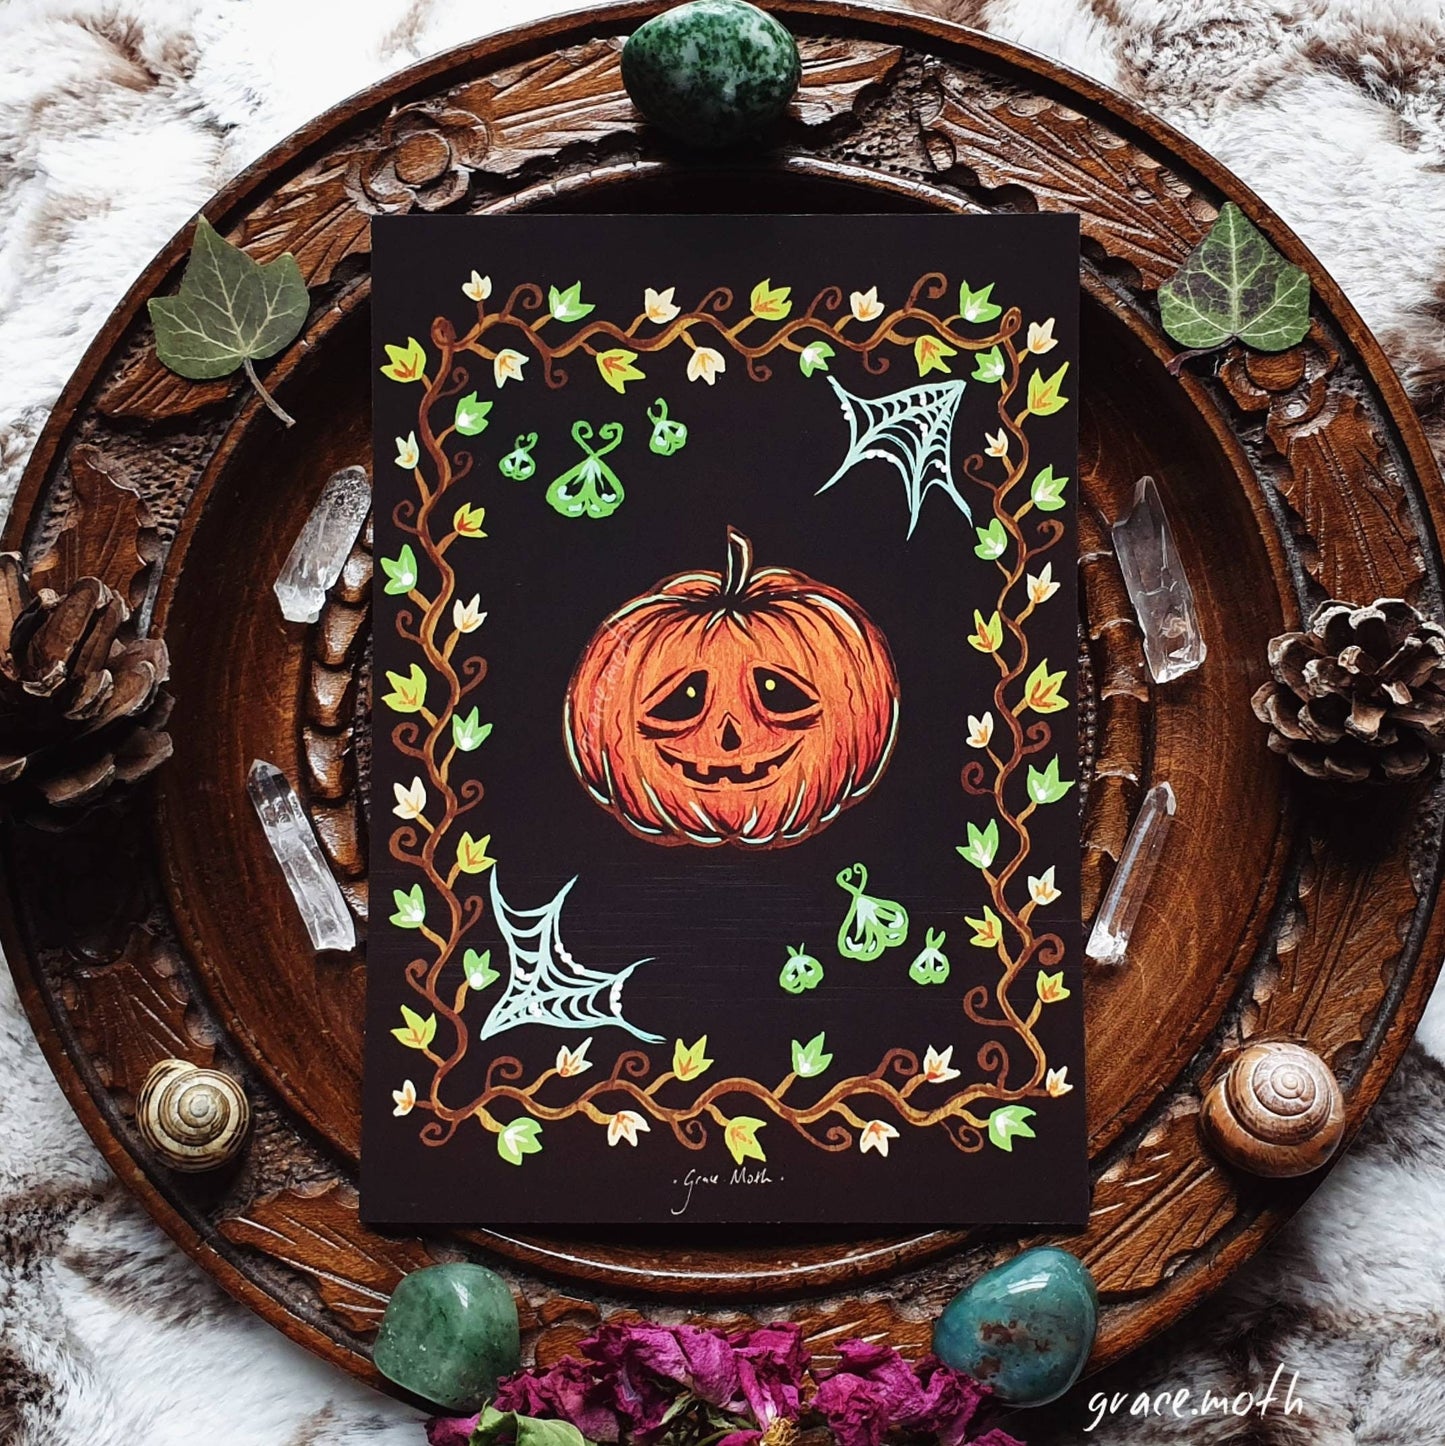 Pumpkin Smile - A6 Halloween print by Grace Moth - 5.8 x 4.1